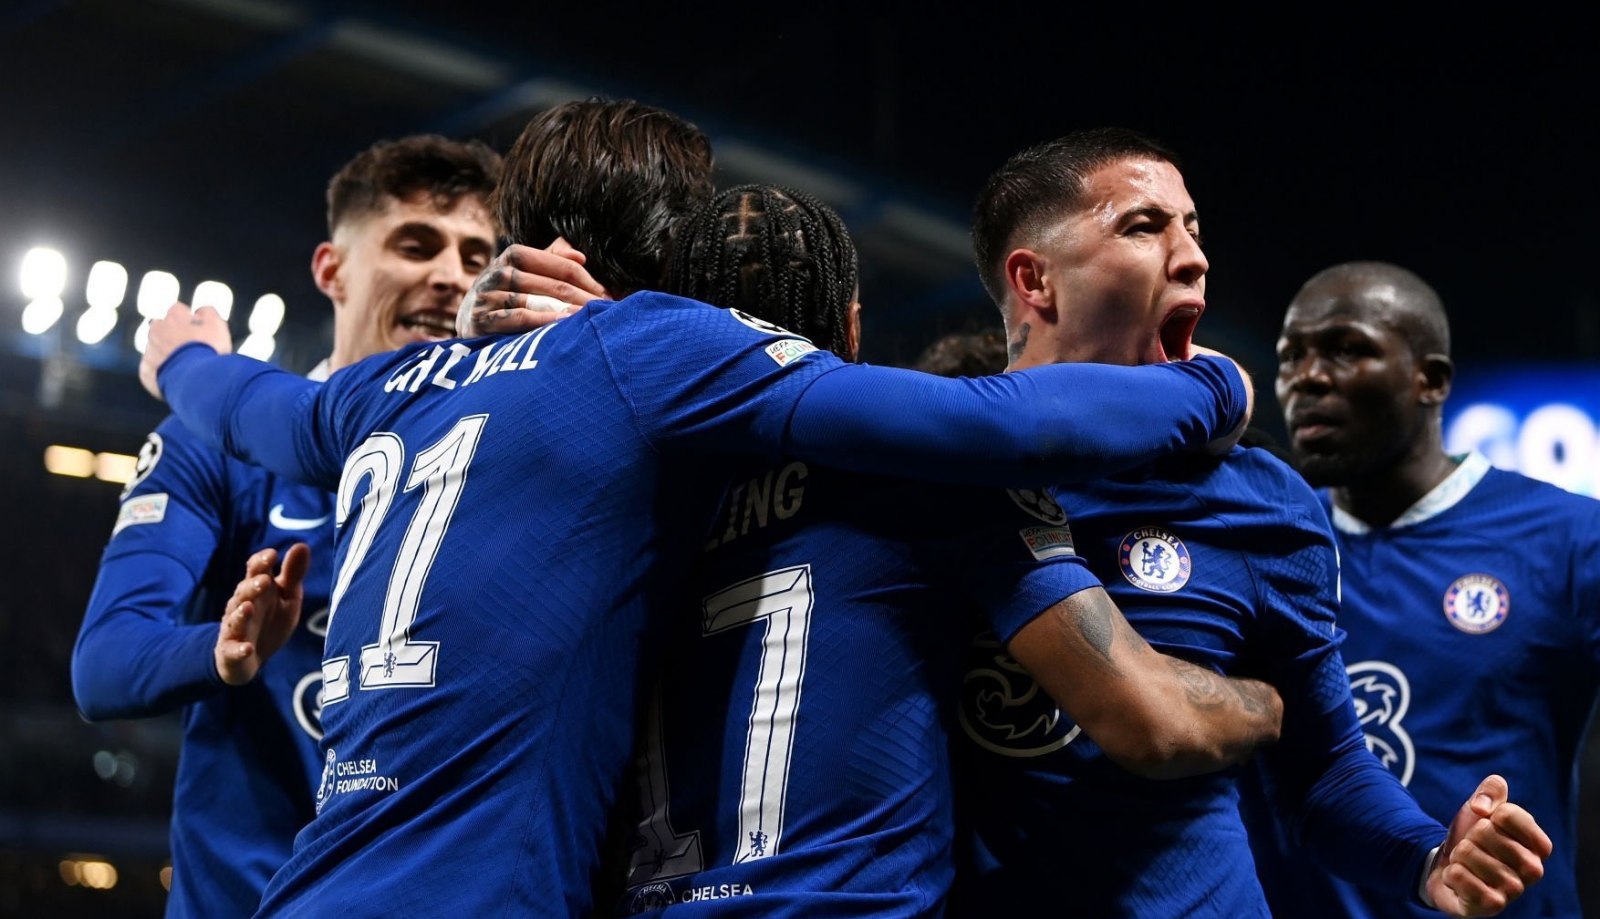 Champions League: Chelsea avanza a cuartos de final al vencer al Borussia Dortmund